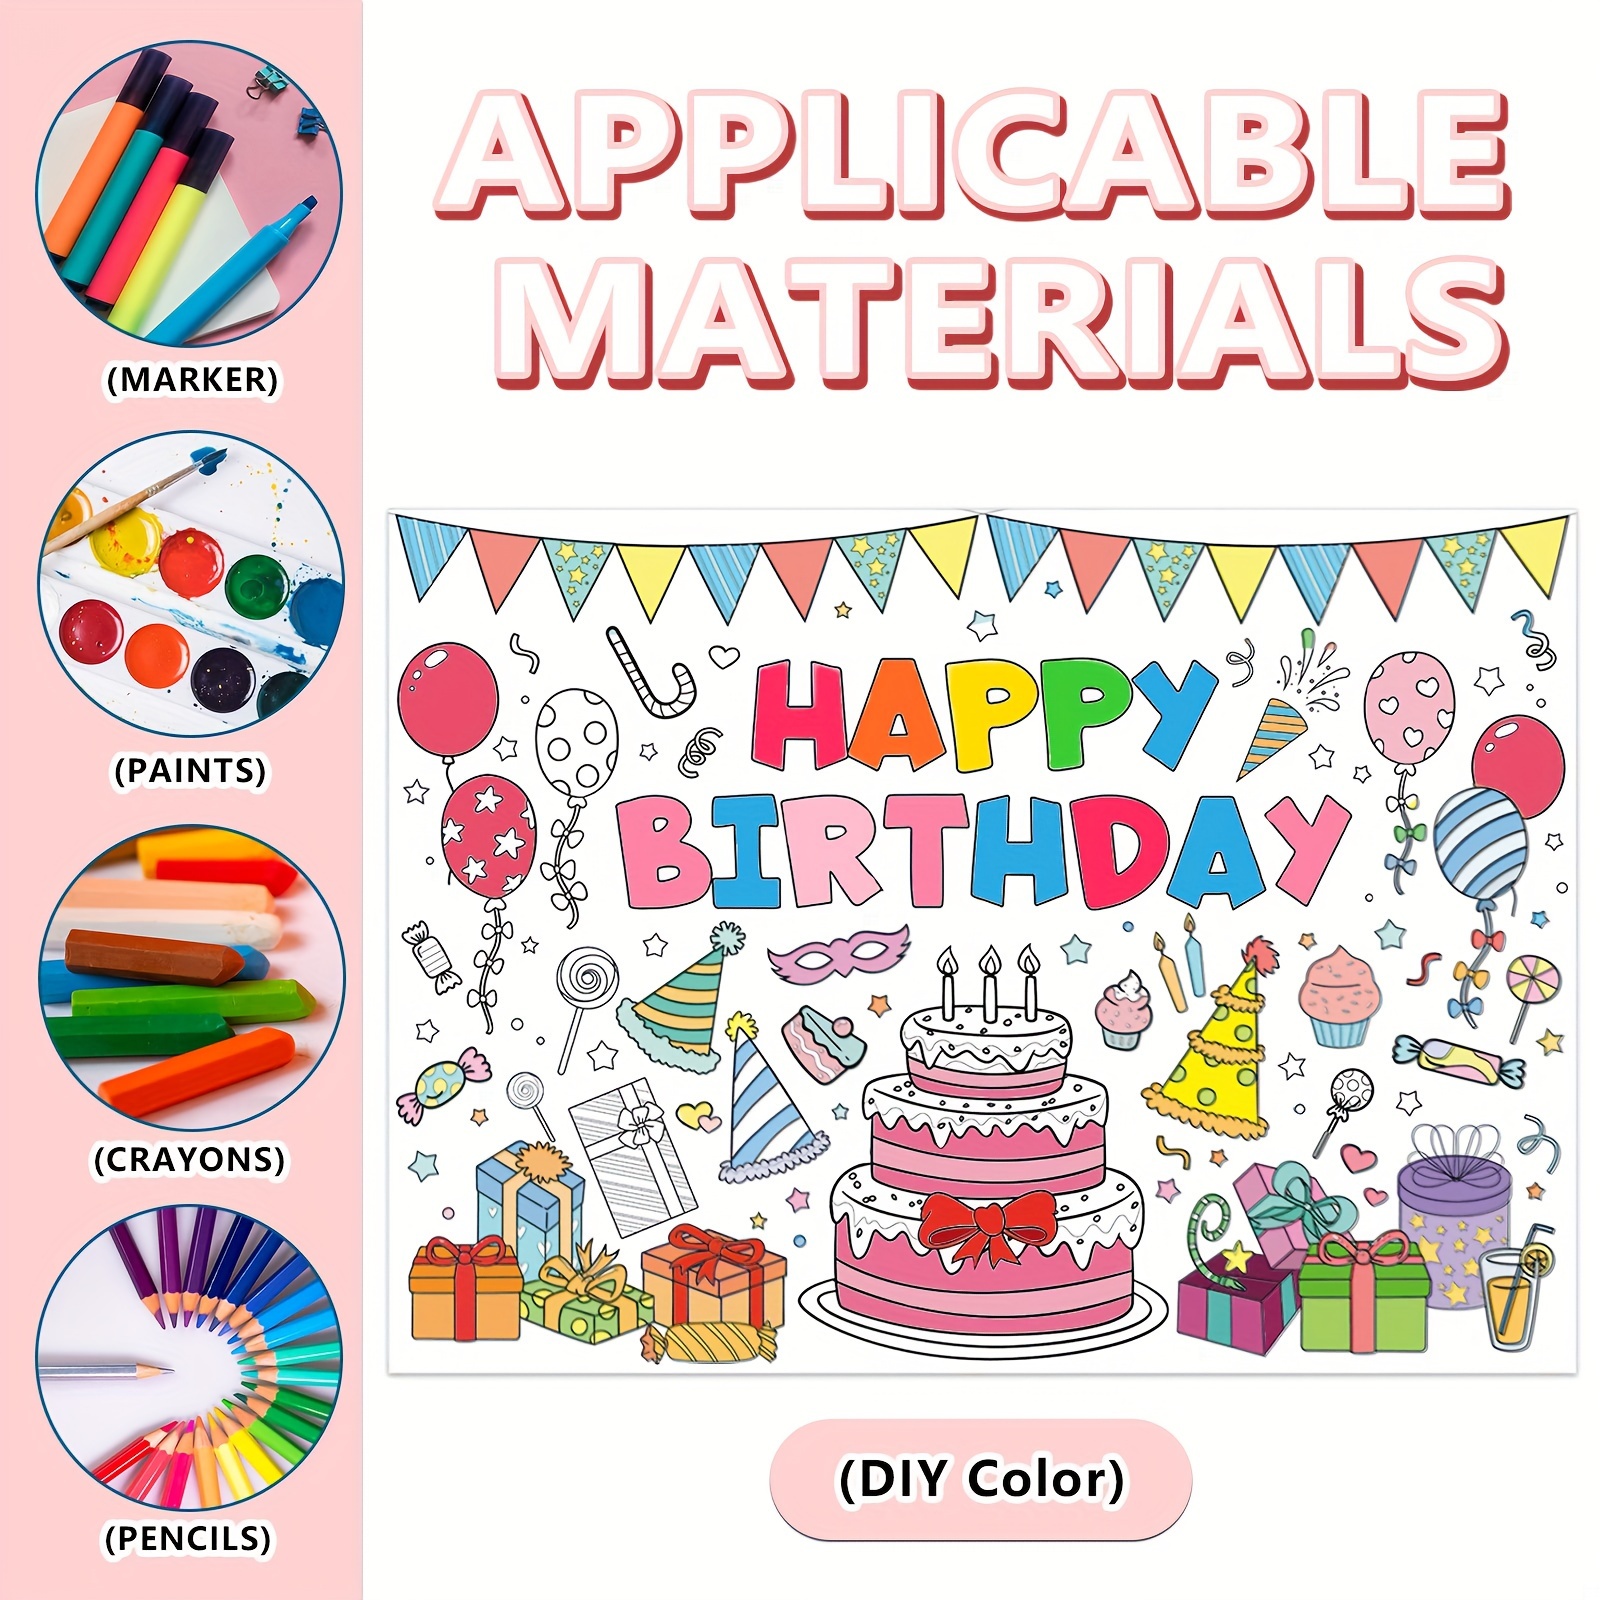 Happy Birthday Coloring Tablecloth